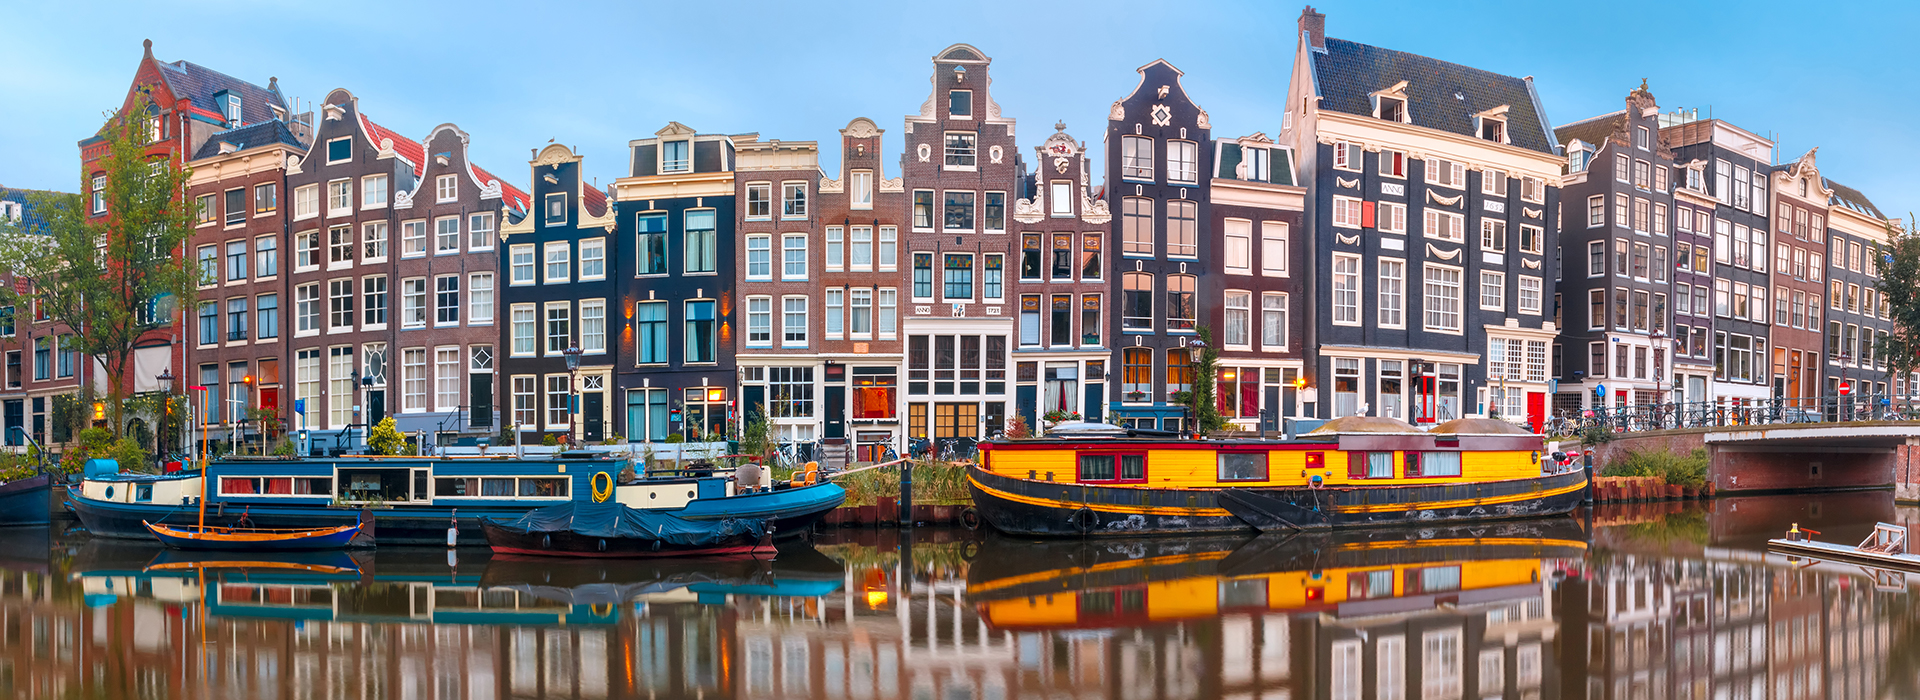 canal-amsterdam-singel-casas-holandesas